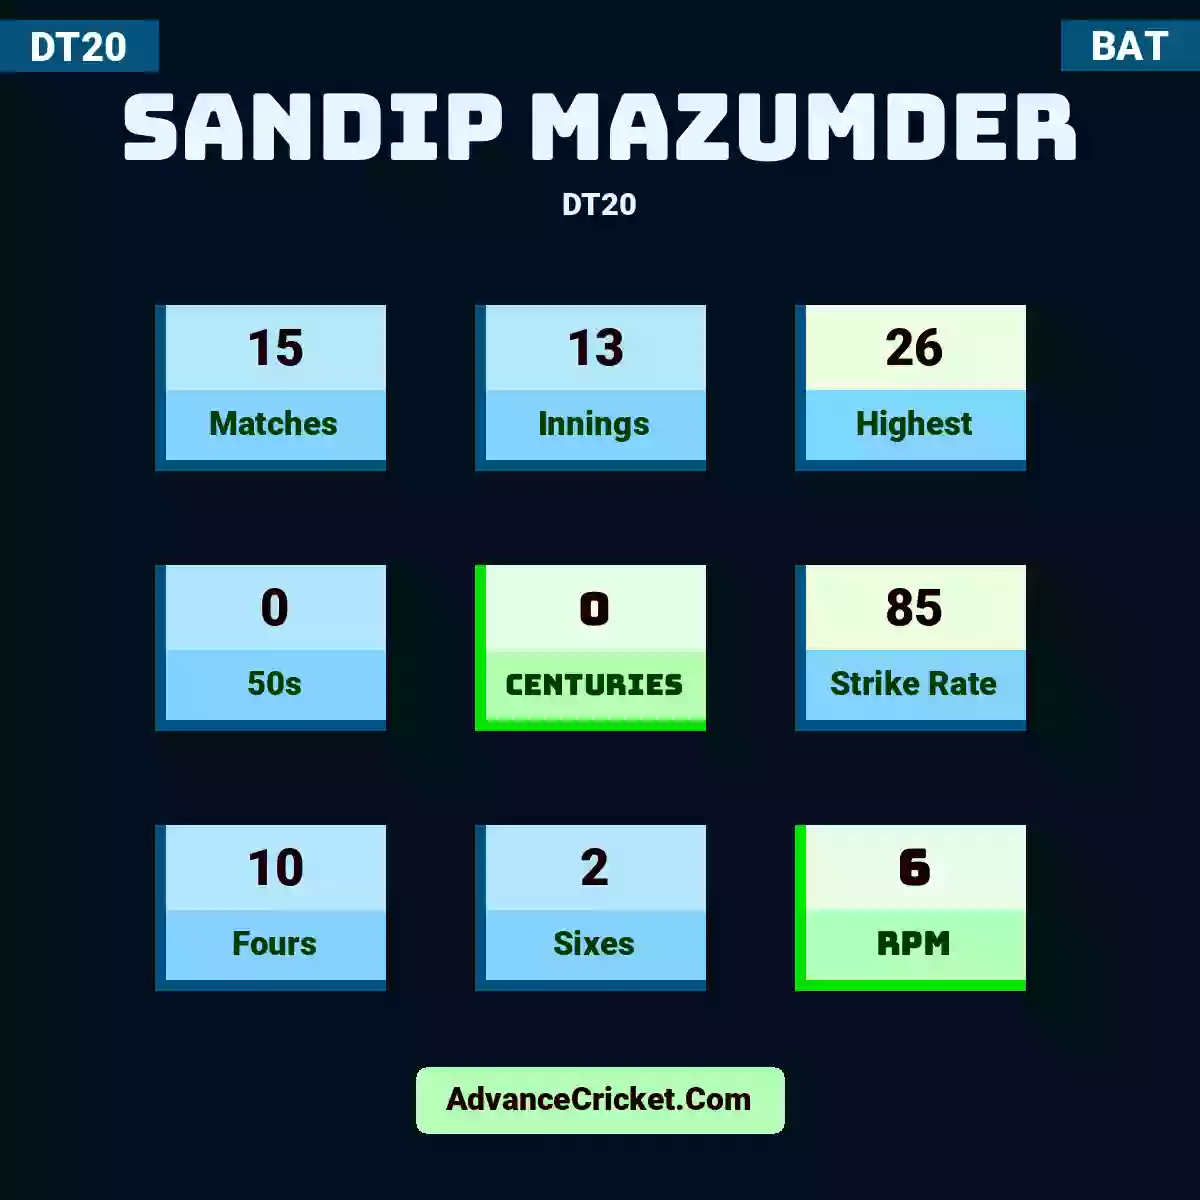 Sandip Mazumder DT20 , Sandip Mazumder played 15 matches, scored 26 runs as highest, 0 half-centuries, and 0 centuries, with a strike rate of 85. S.Mazumdar hit 10 fours and 2 sixes, with an RPM of 6.